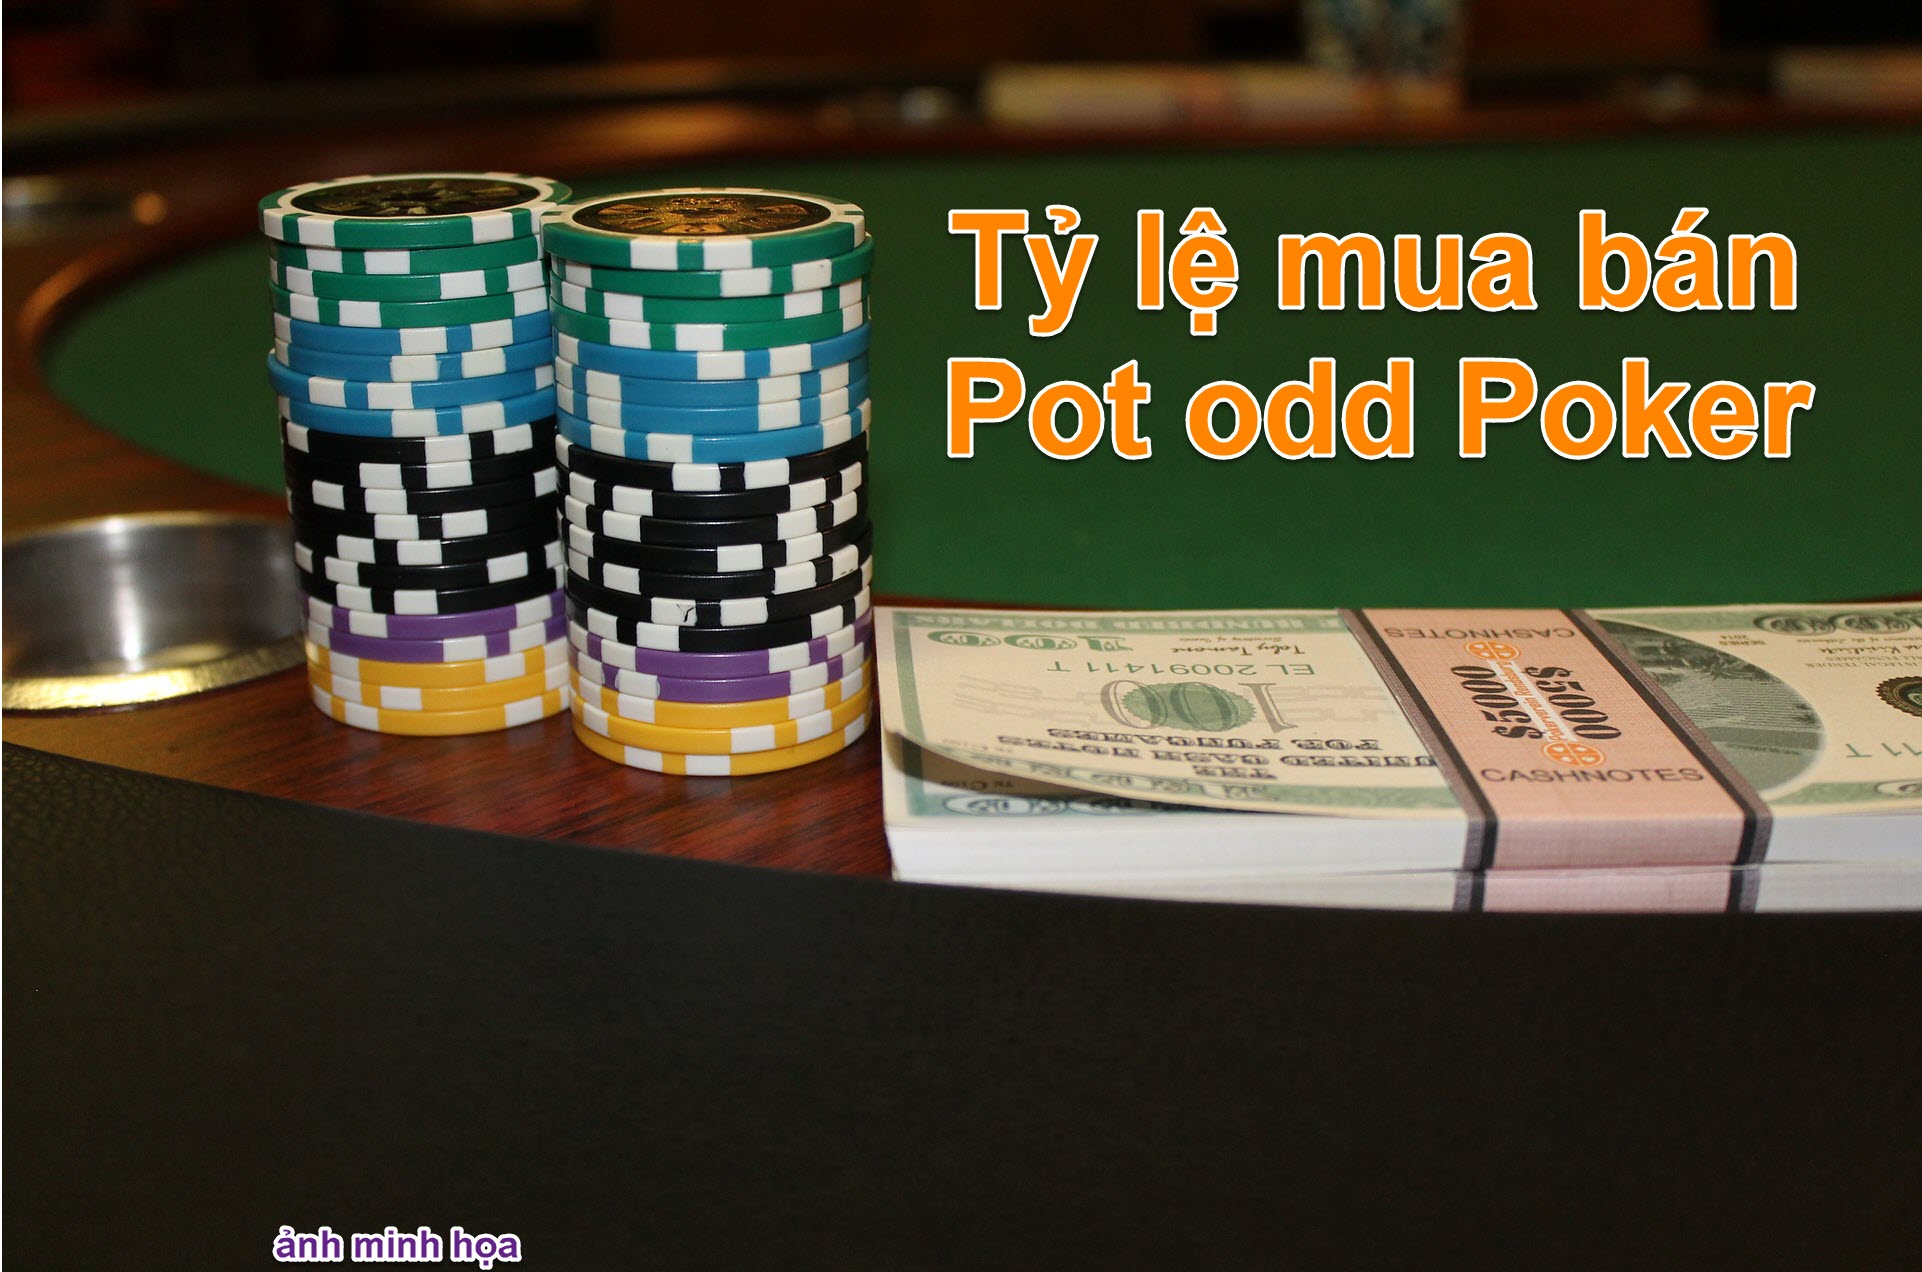 ty le mua ban Pot odd trong Poker 01 ver 01.jpg